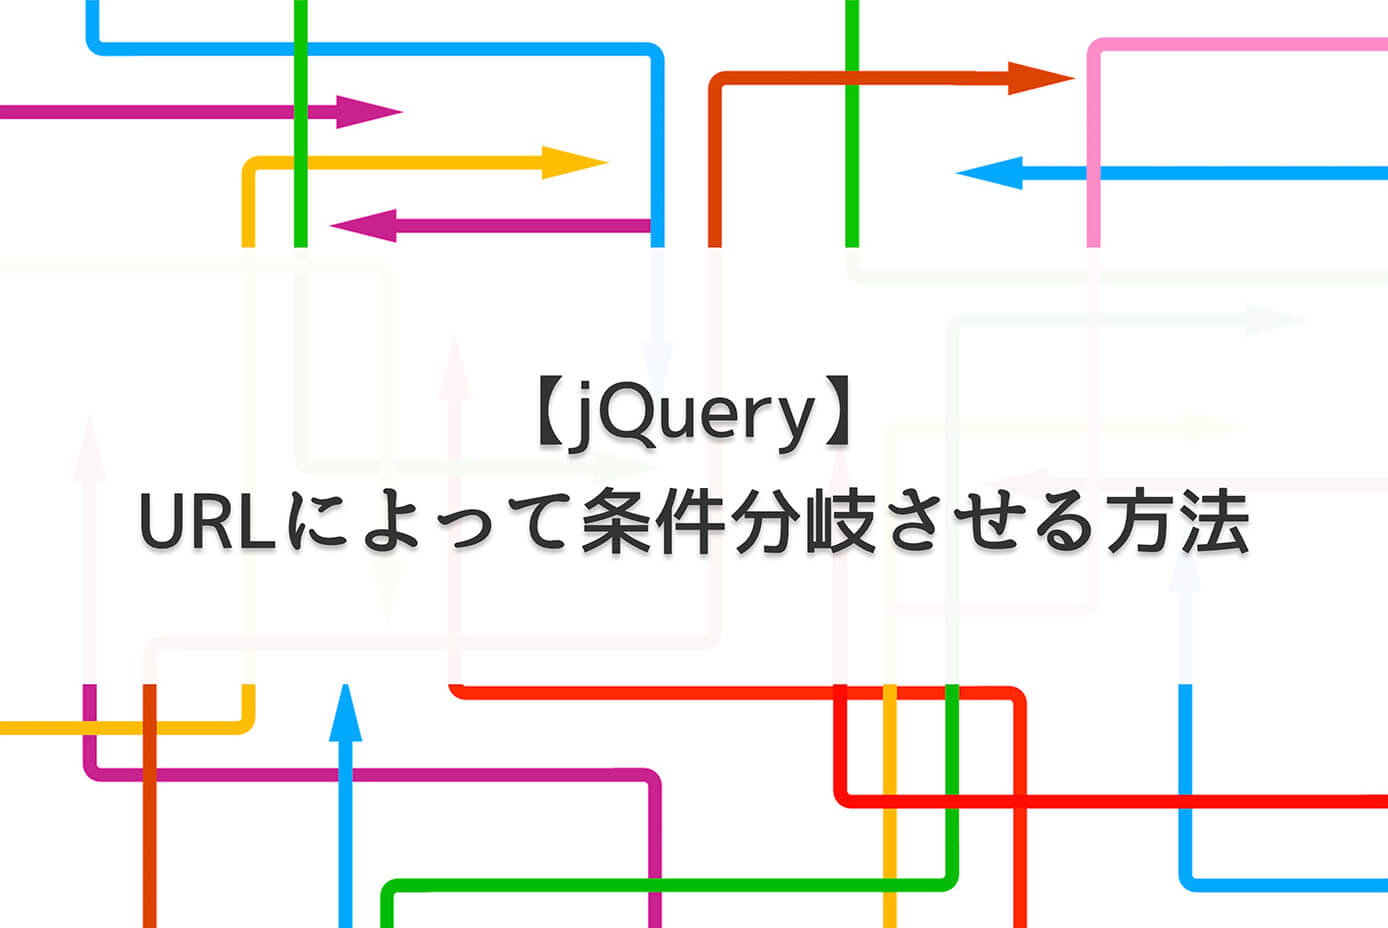 【jQuery】URLによって条件分岐させる方法